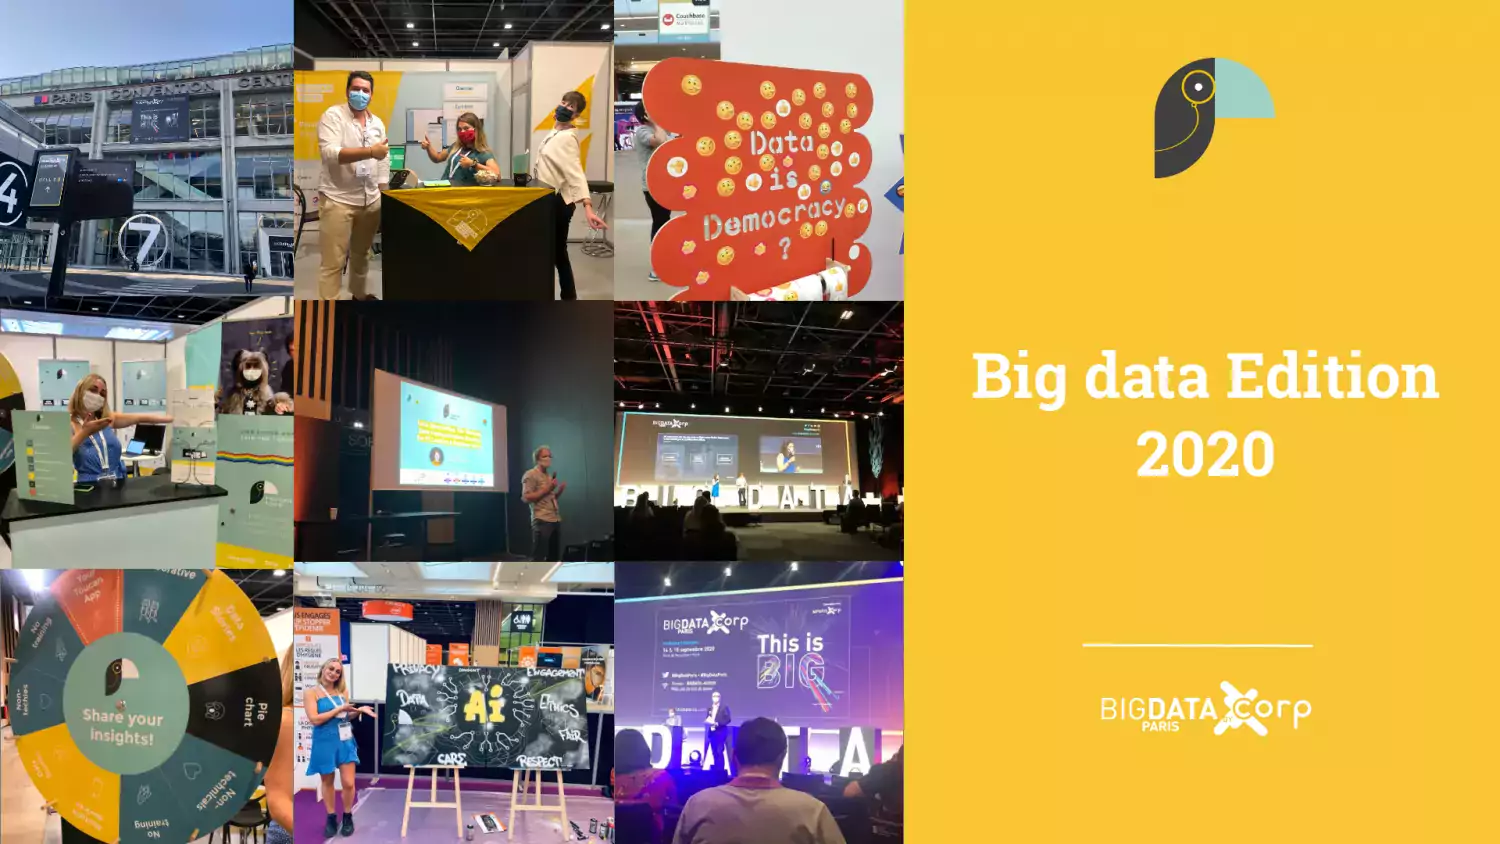 Big data edition 2020